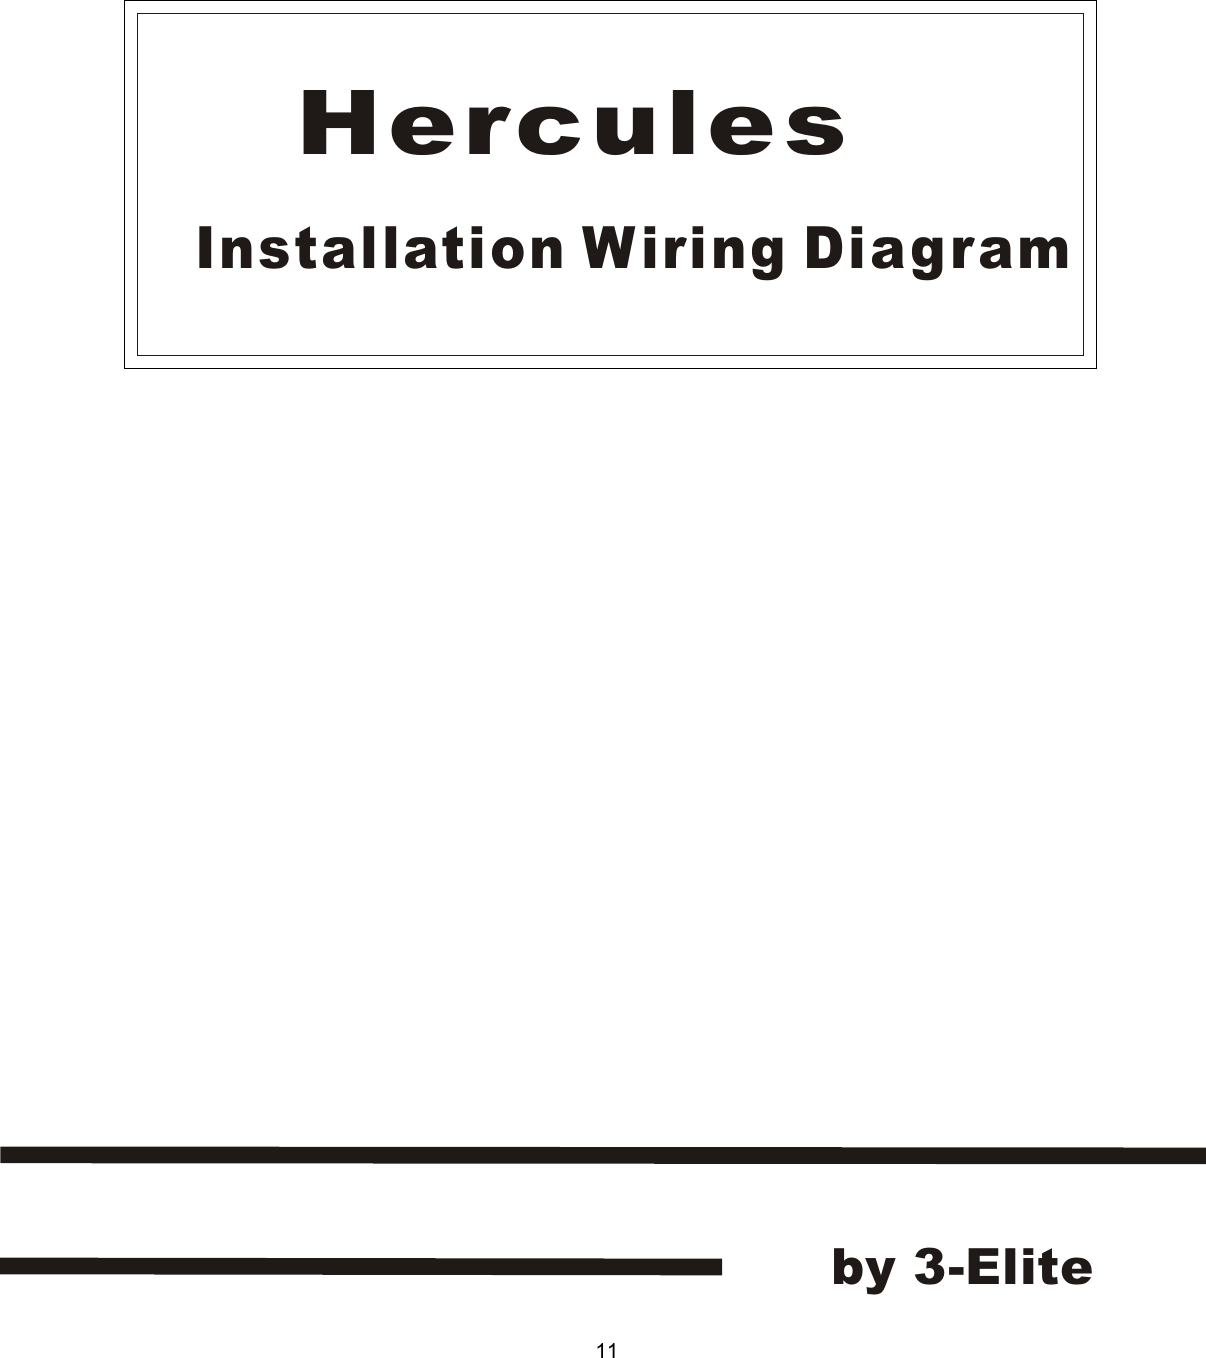 HerculesInstallation Wiring Diagramby 3-Elite11